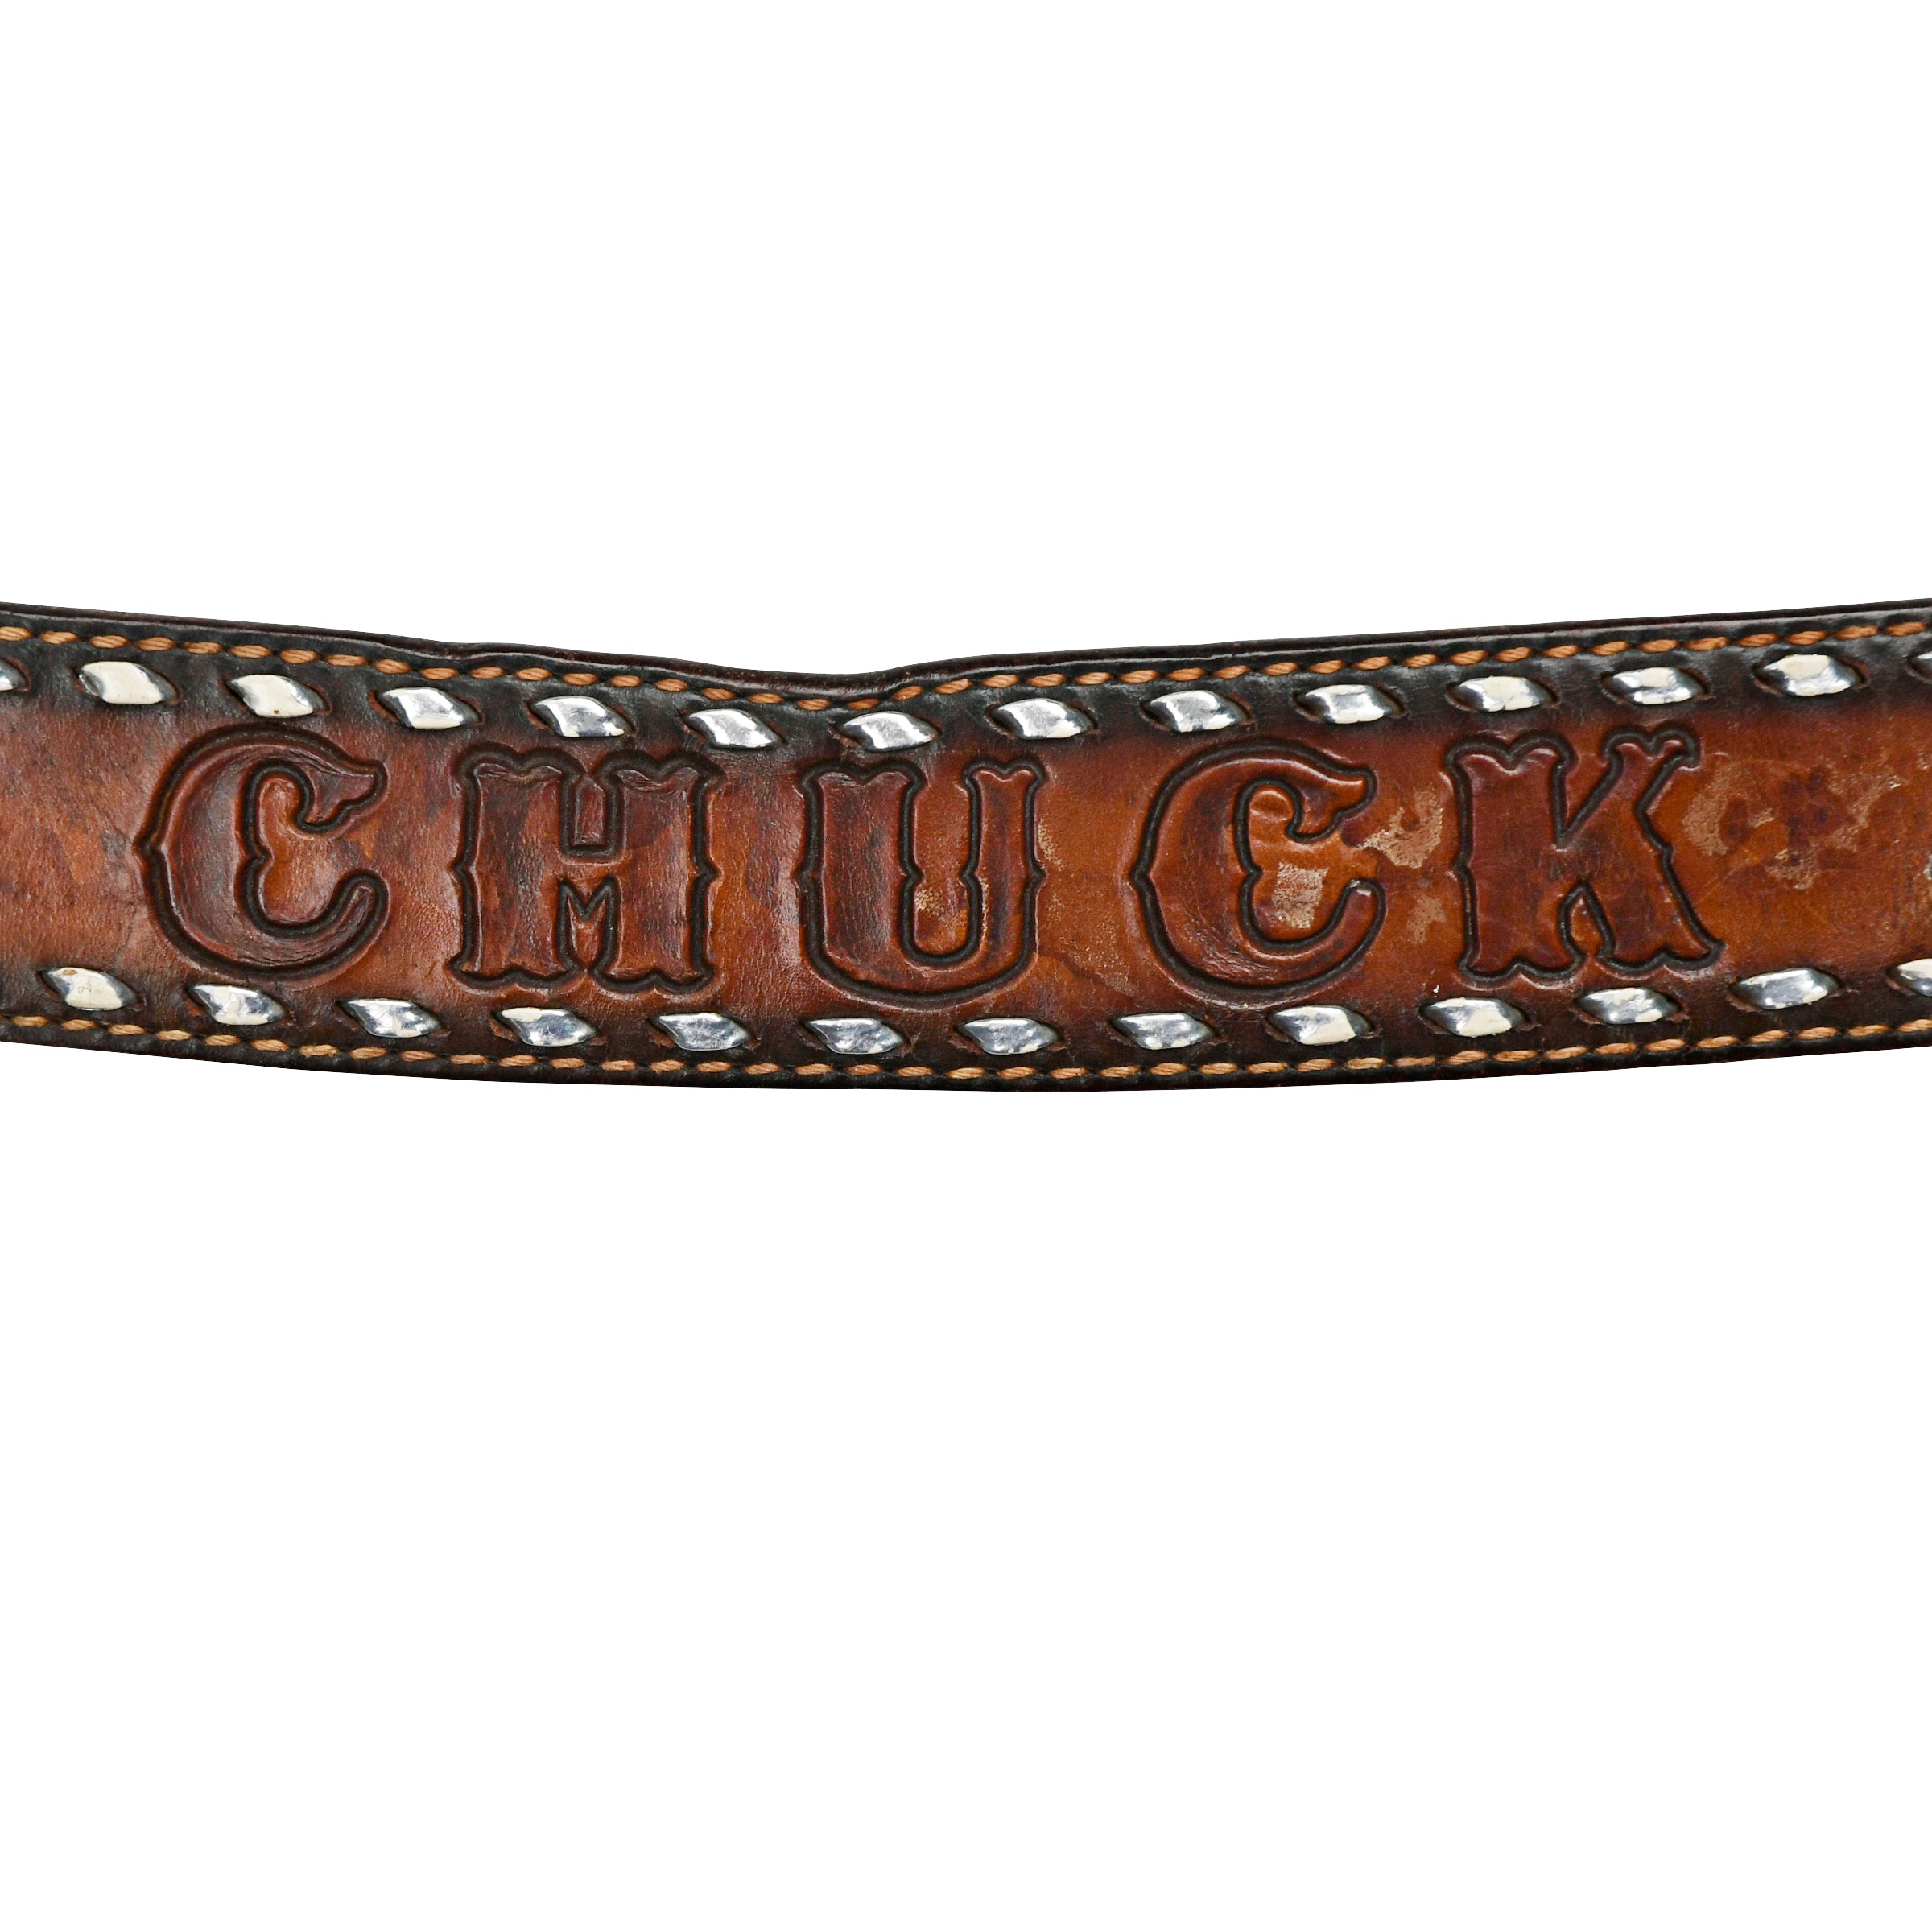 Harrison Jim Morenci Turquoise Buckle and Vintage Belt Strap